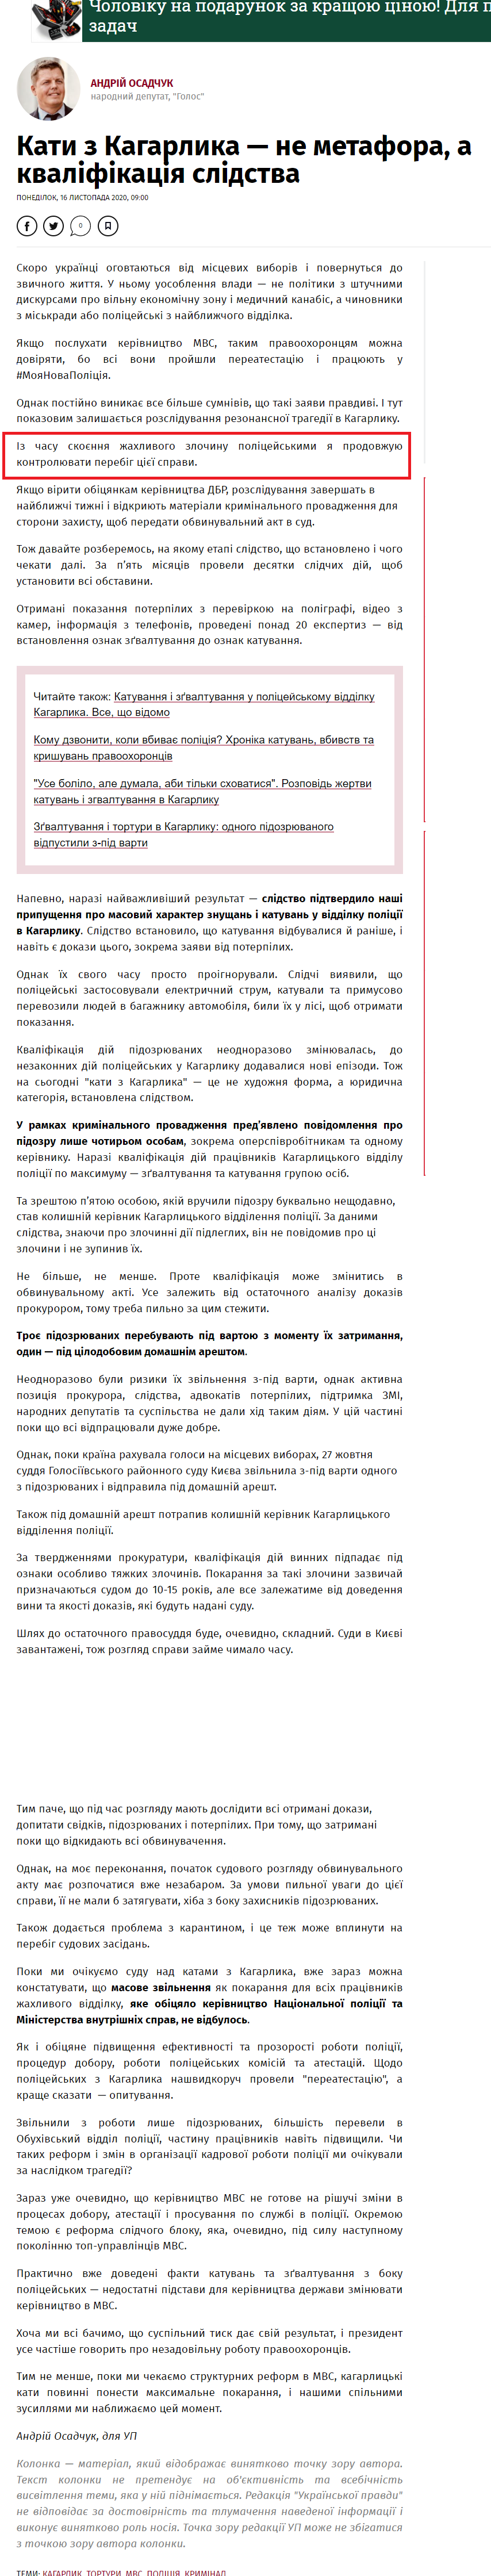 https://www.pravda.com.ua/columns/2020/11/16/7273587/